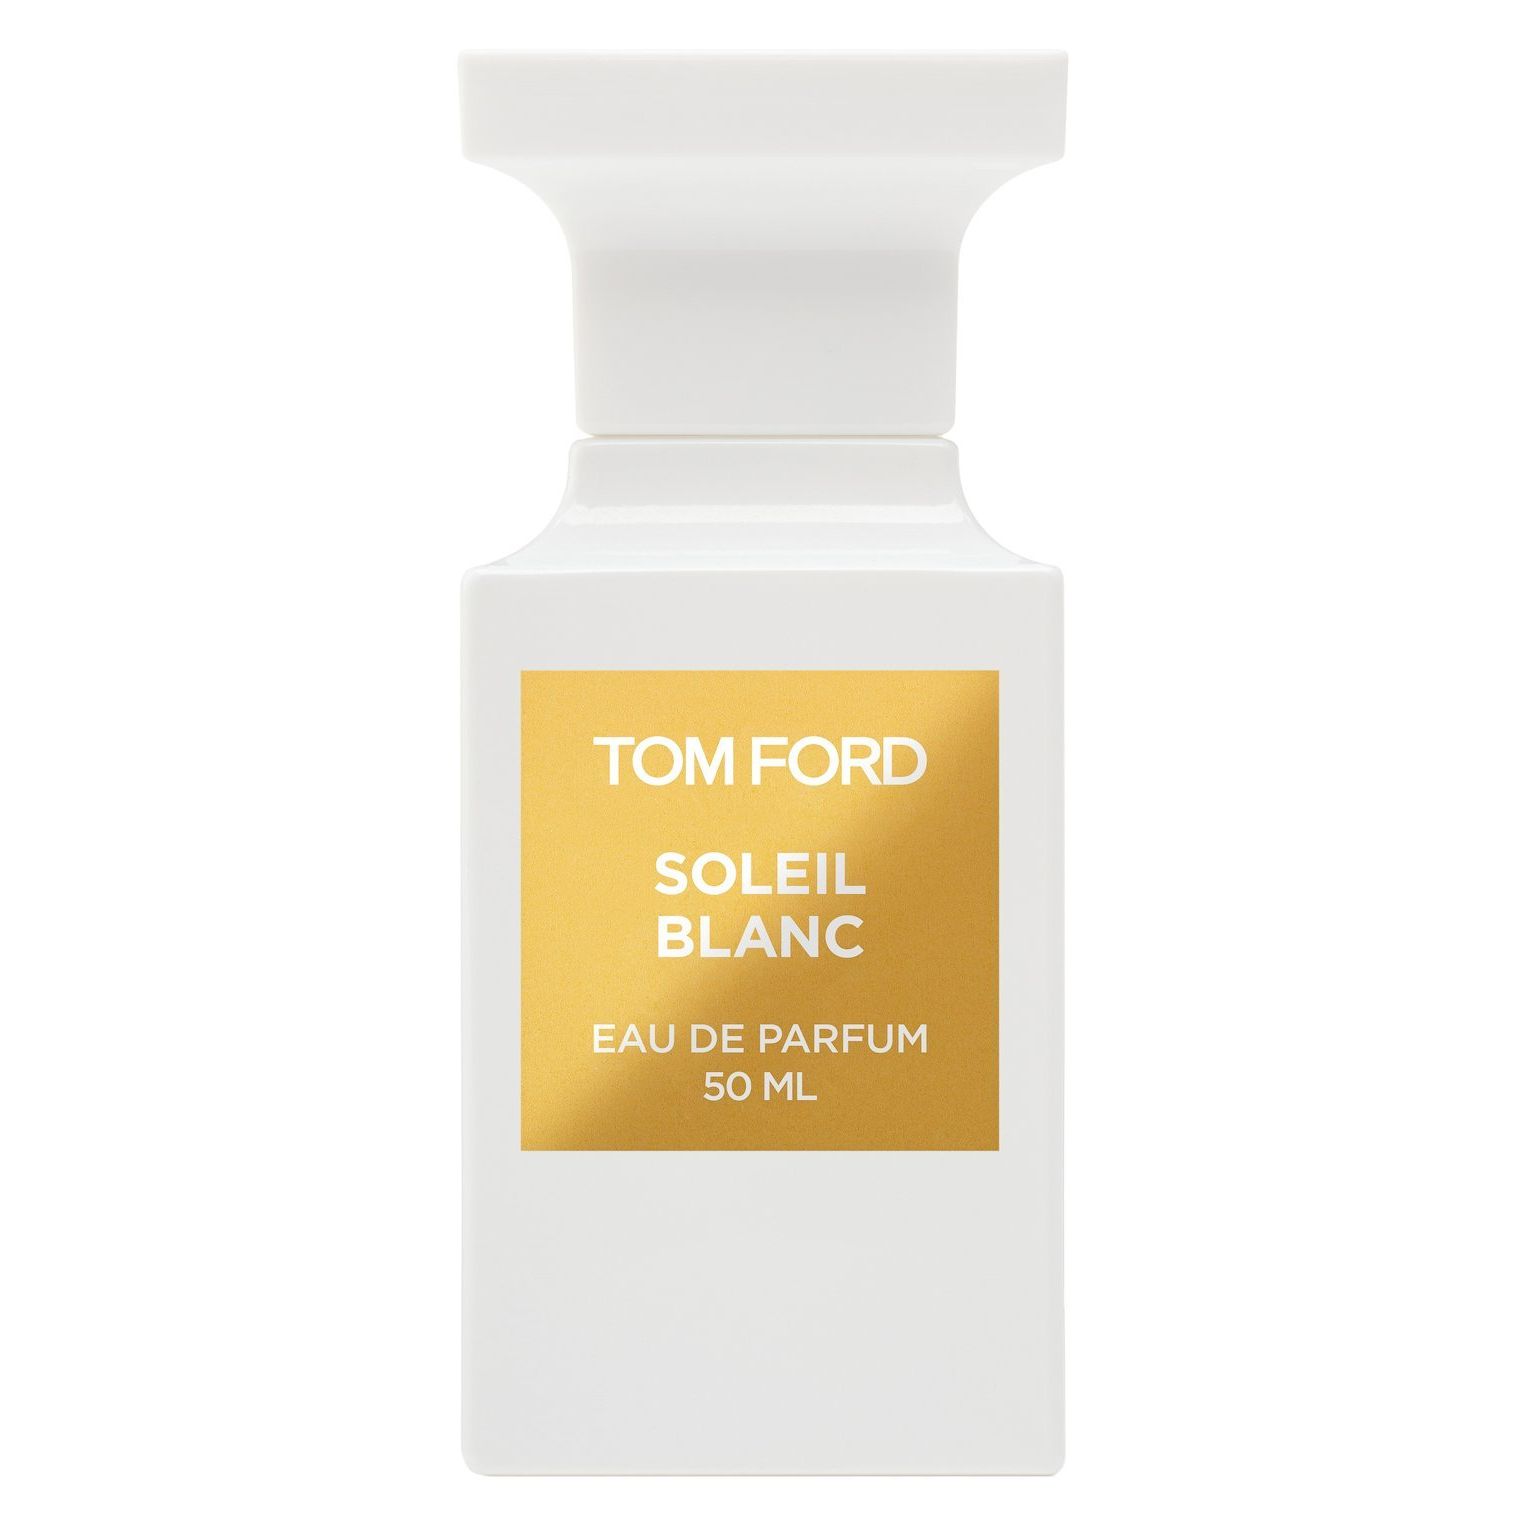 Вода парфюмерная Tom Ford Soleil Blanc, унисекс, 50 мл tom ford спрей для тела soleil neige all over body spray